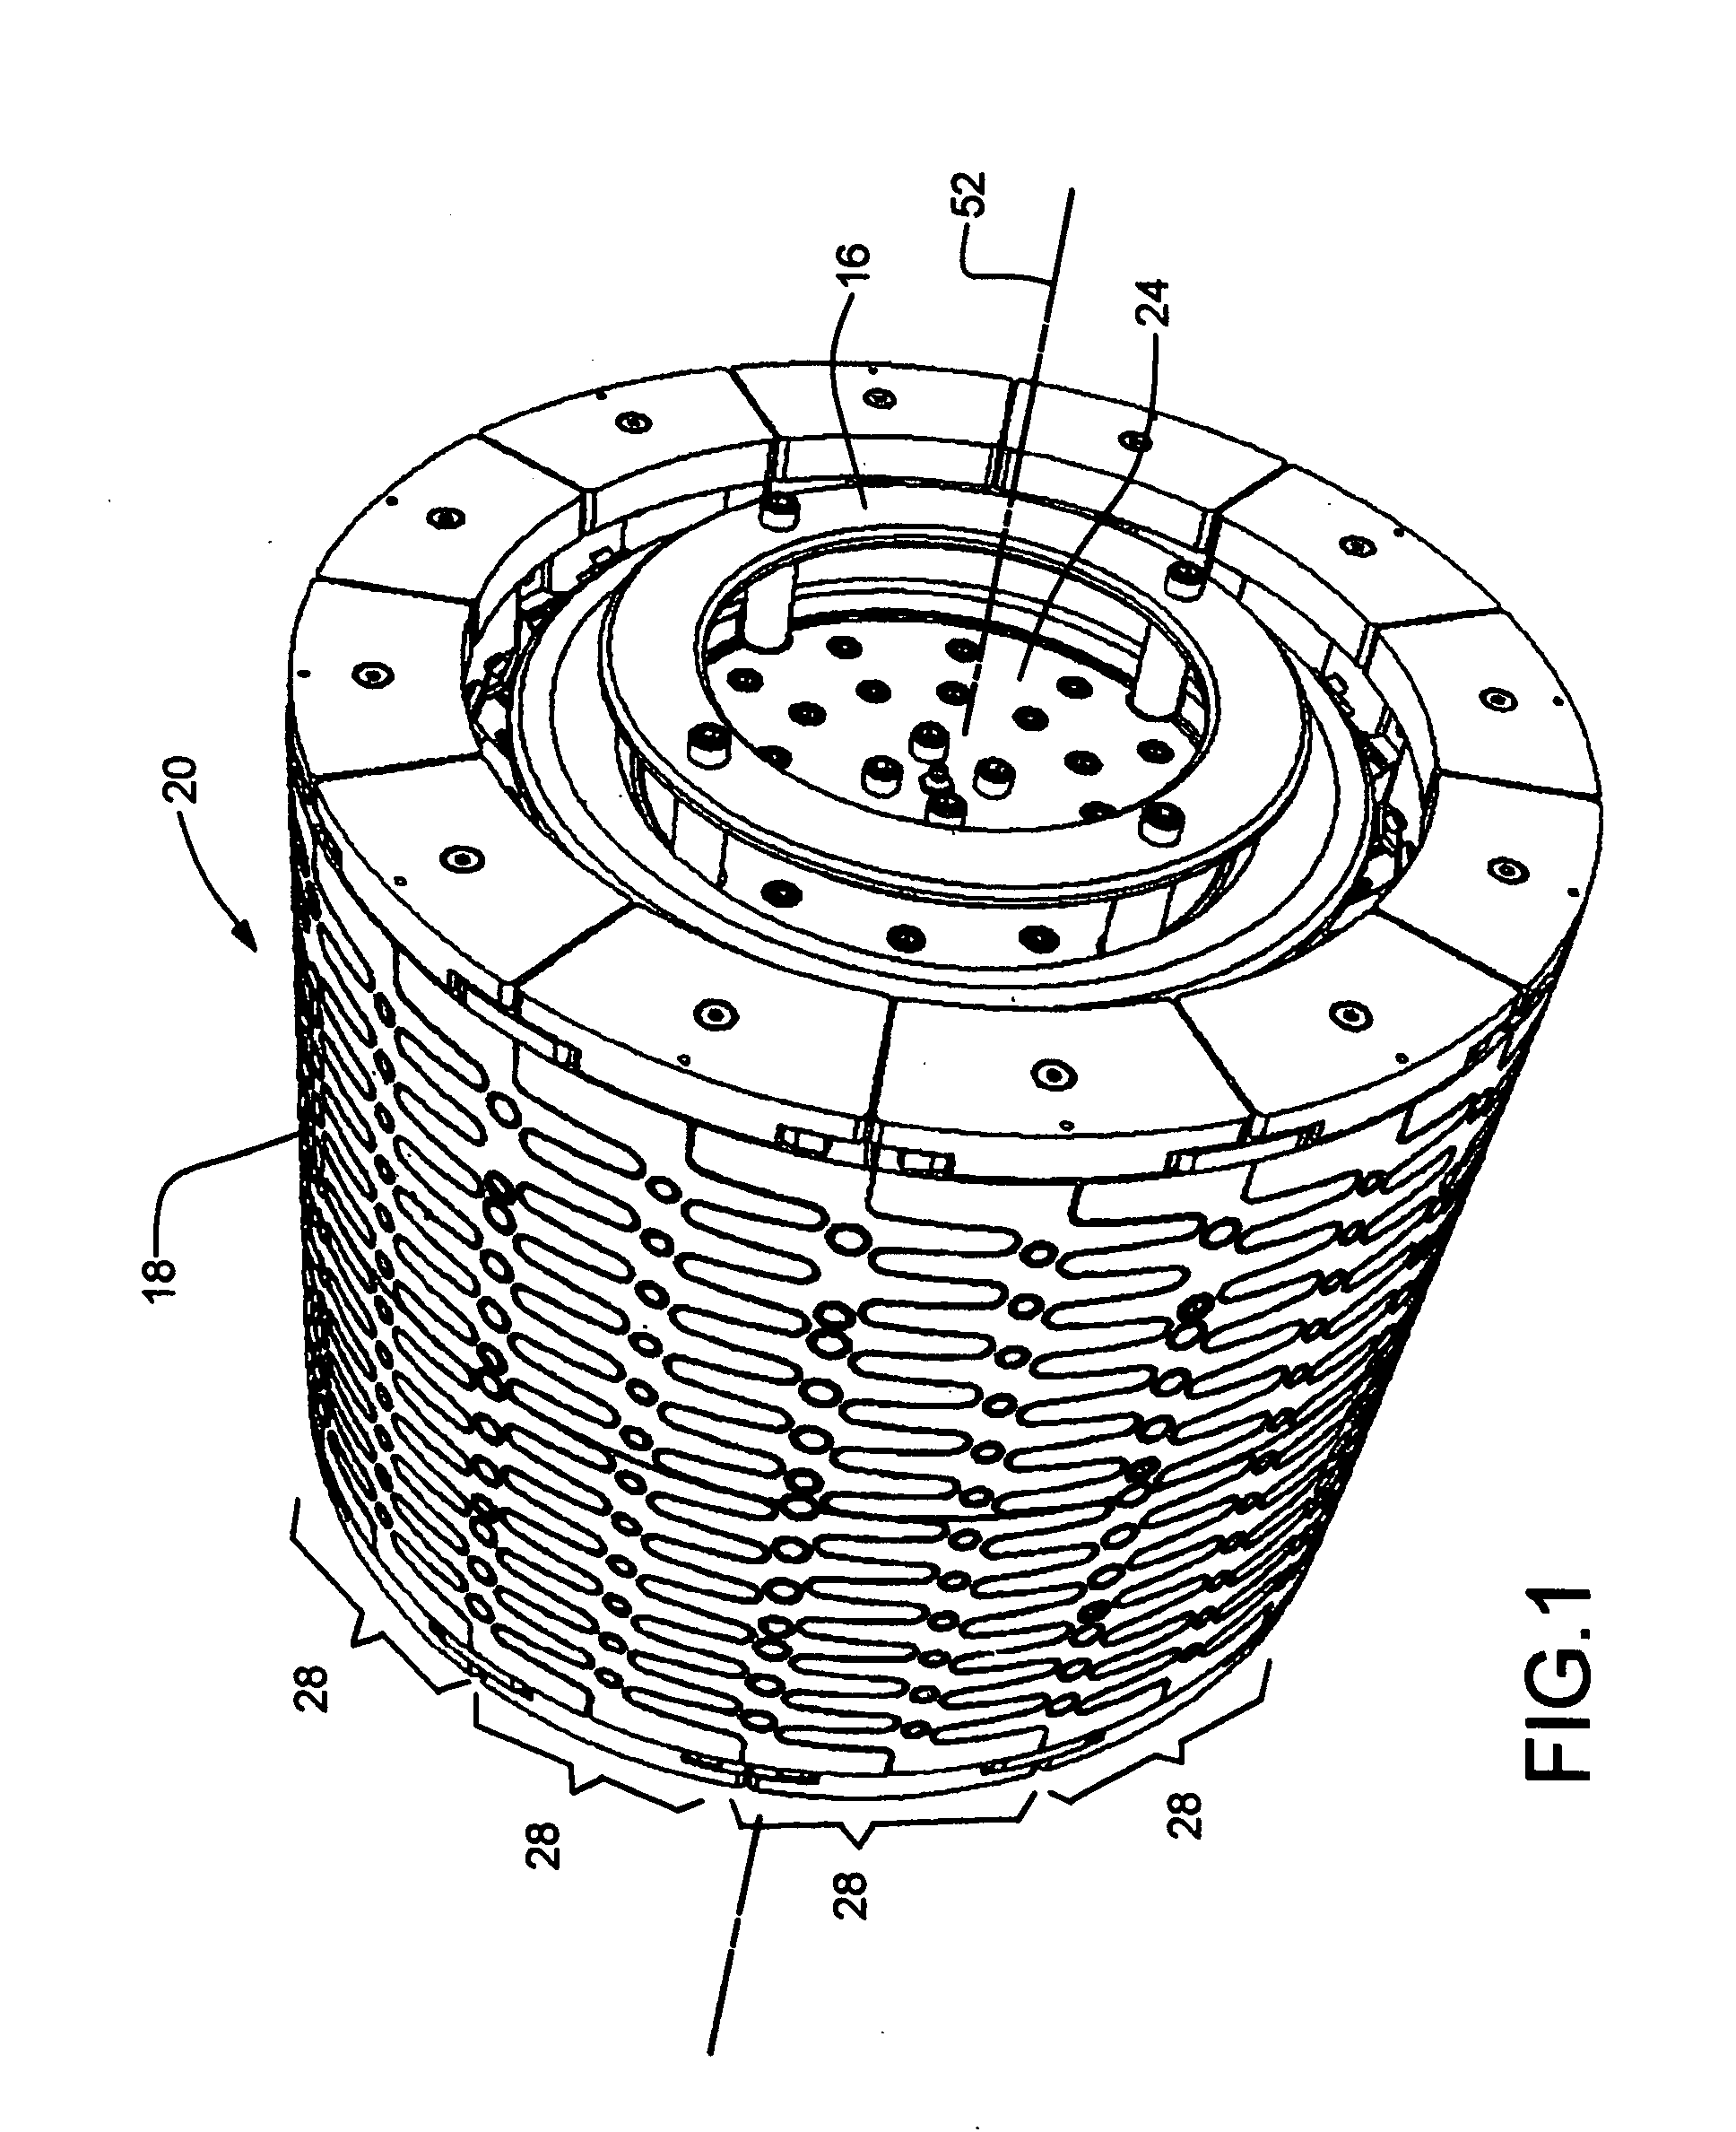 Transfer ring or drum apparatus having adjustable circumference